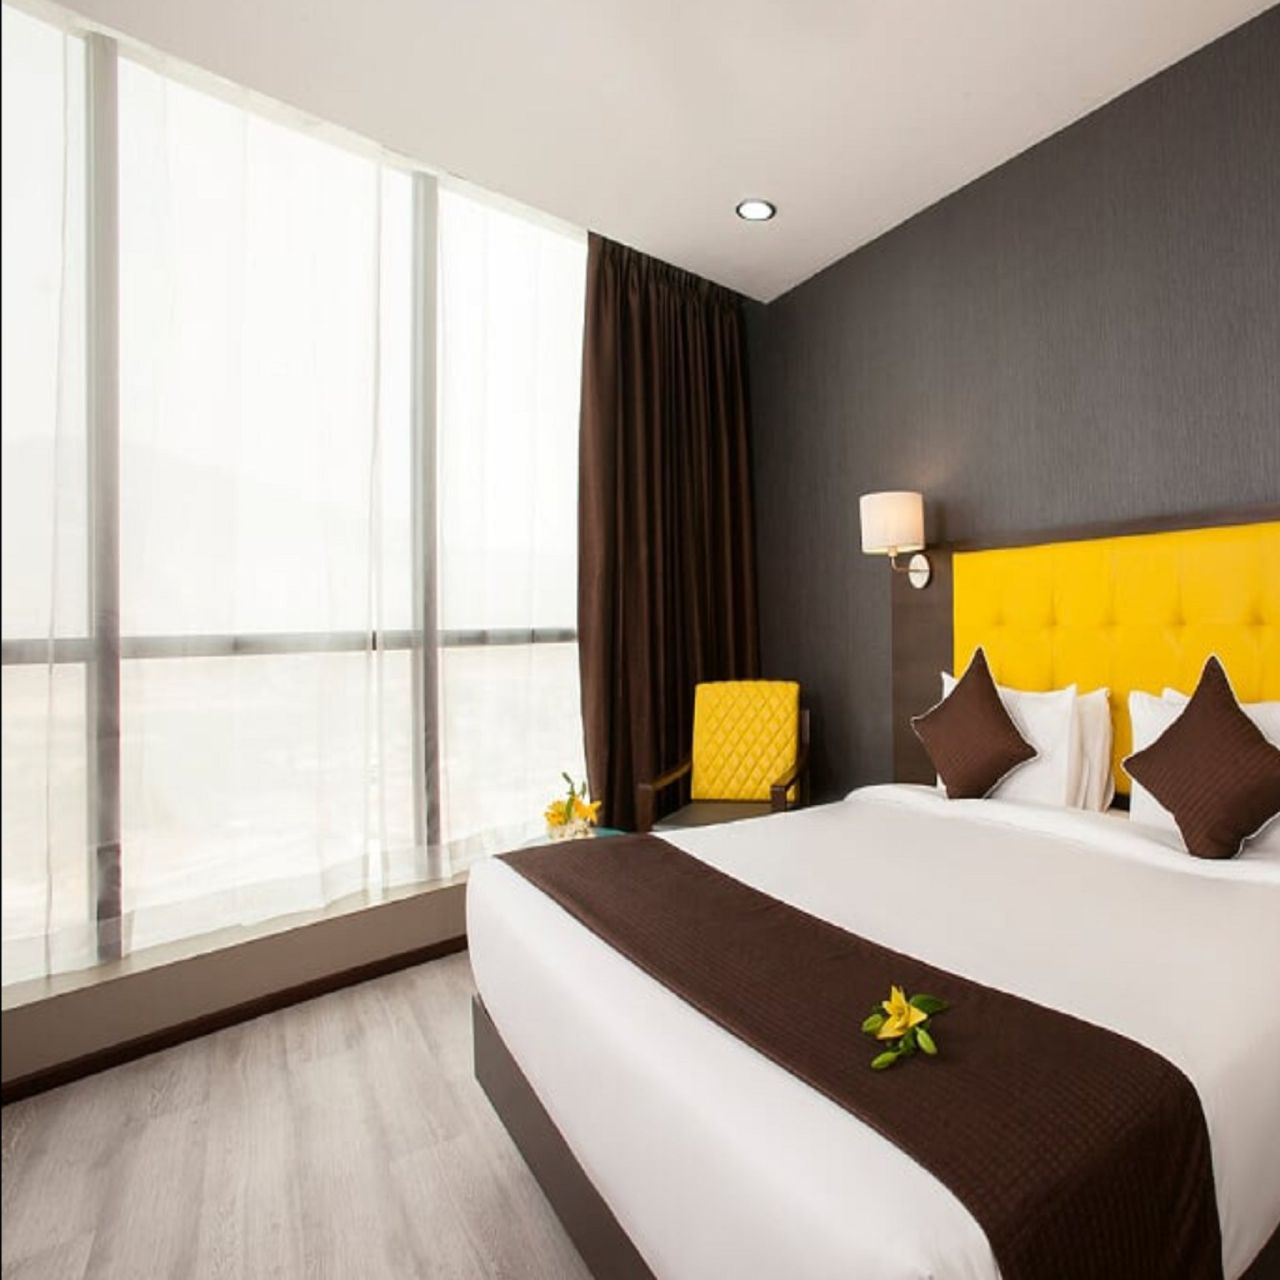 MONDAY HOTELS MAHAPE NAVI MUMBAI - Hotel Reviews, Photos, Rate Comparison -  Tripadvisor